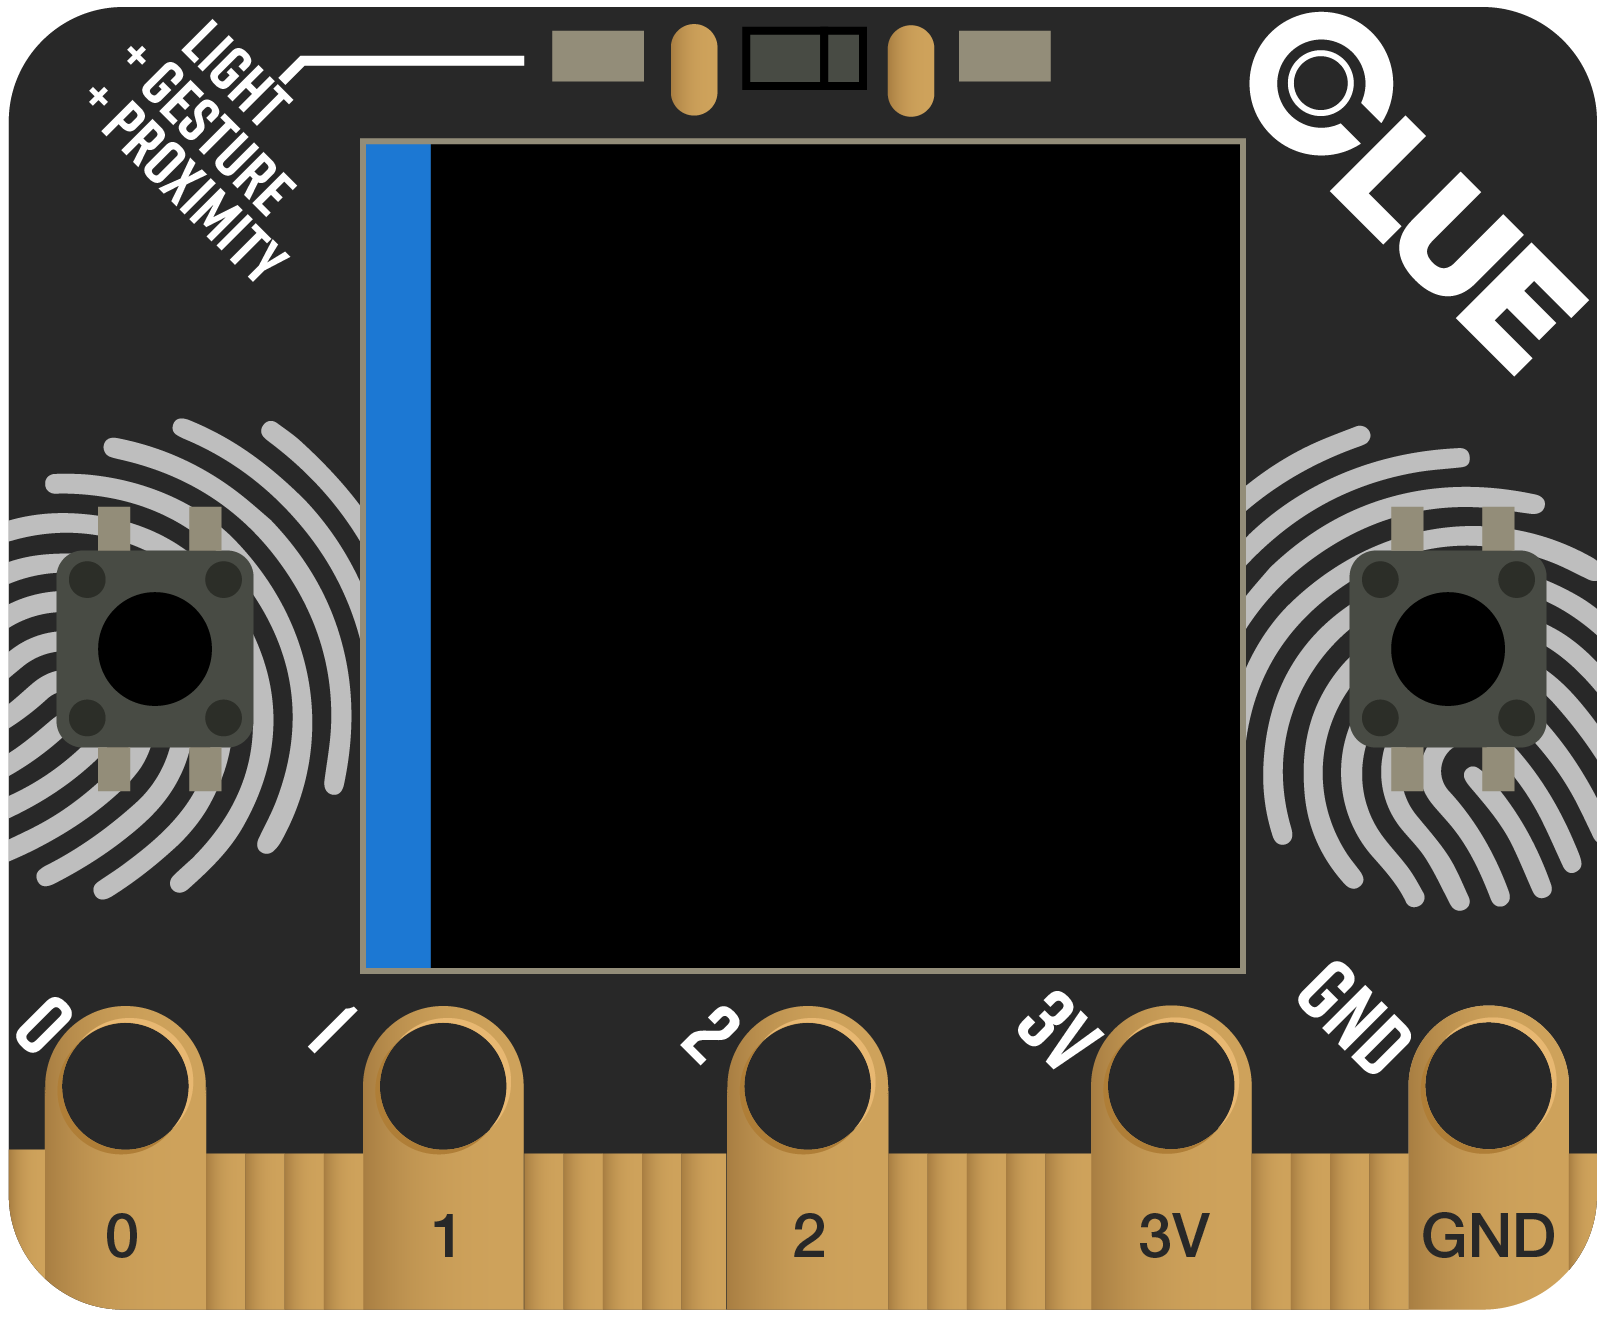 Clue Electronics Board